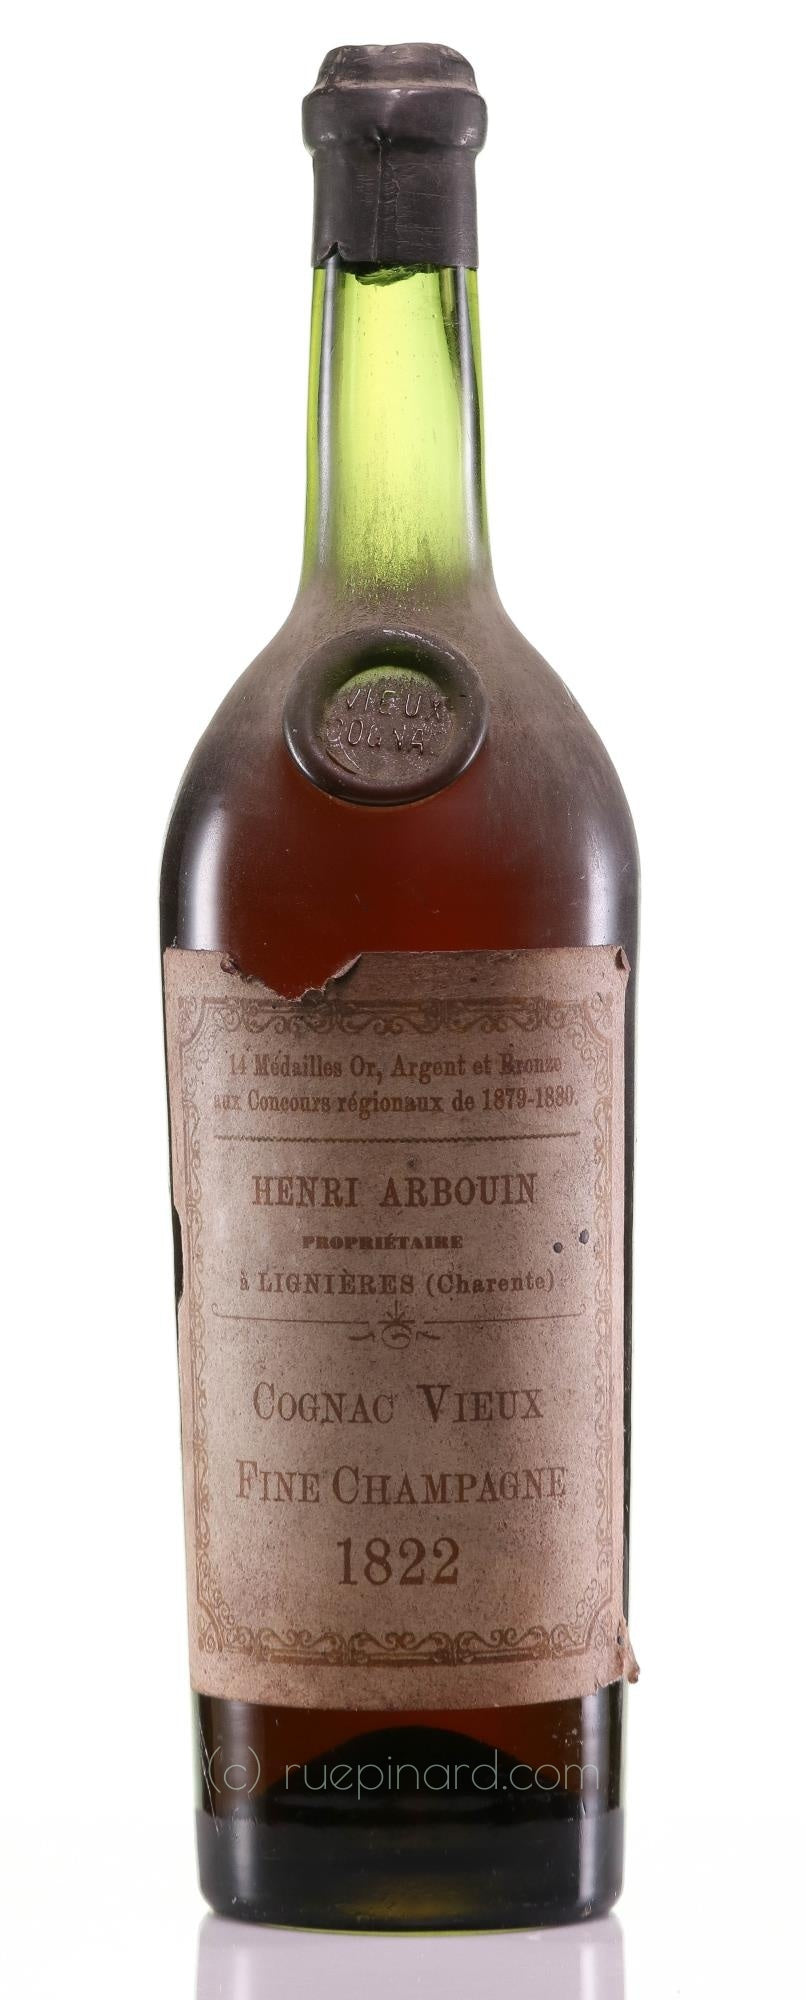 Henri Arbouin 1822 Cognac Non-Vintage - Rue Pinard